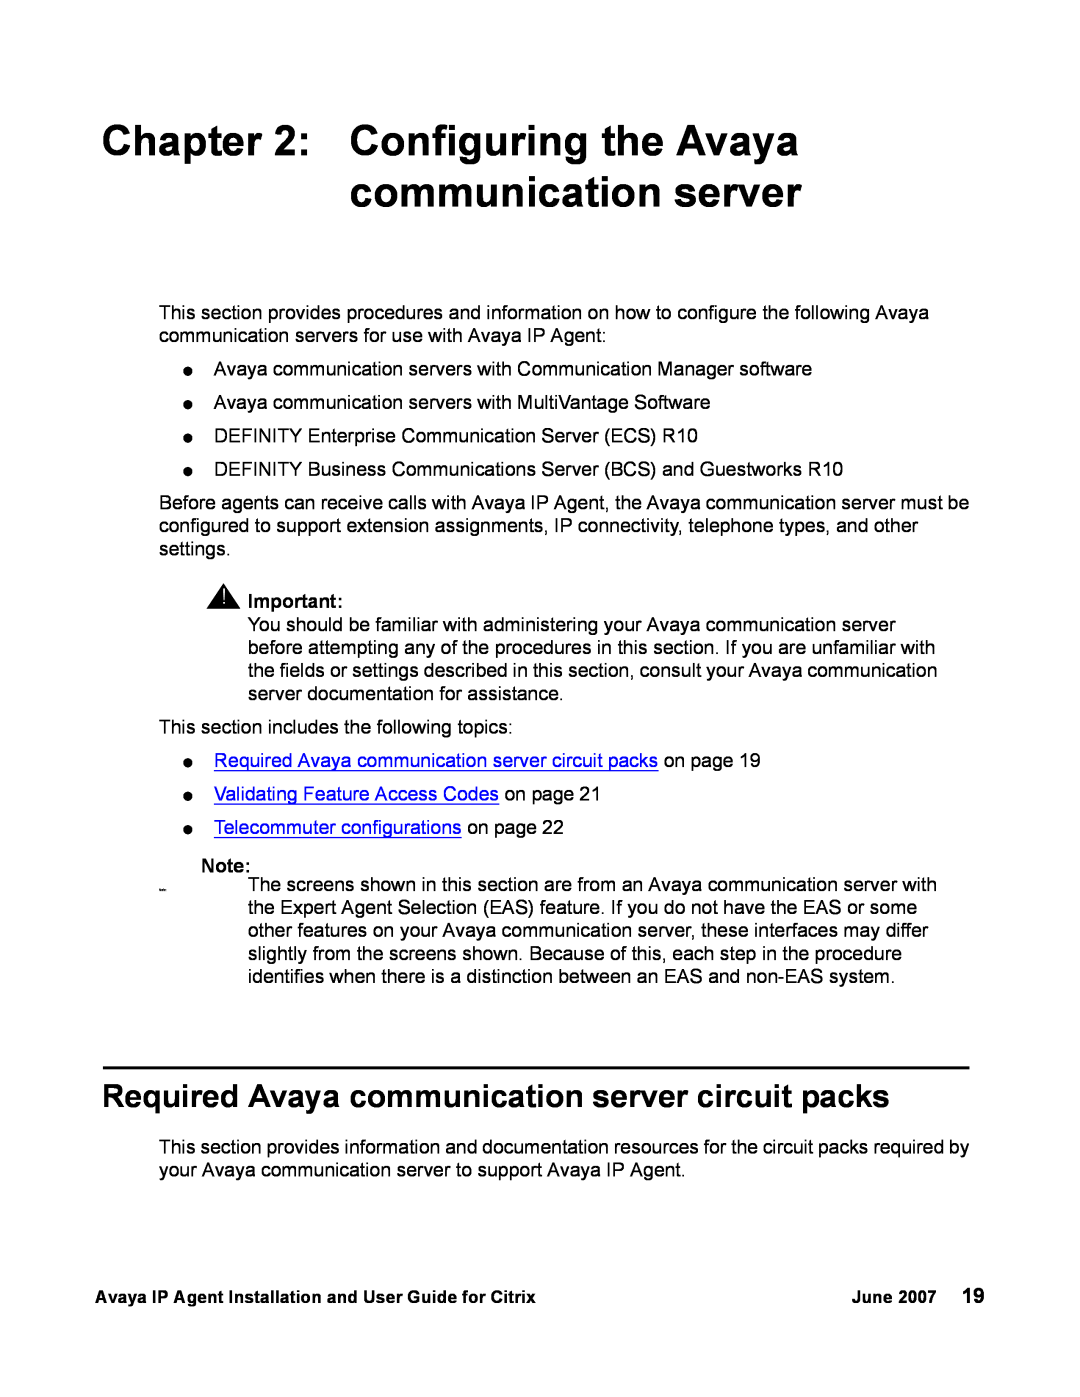 Avaya 7 manual Configuring the Avaya communication server, Required Avaya communication server circuit packs 